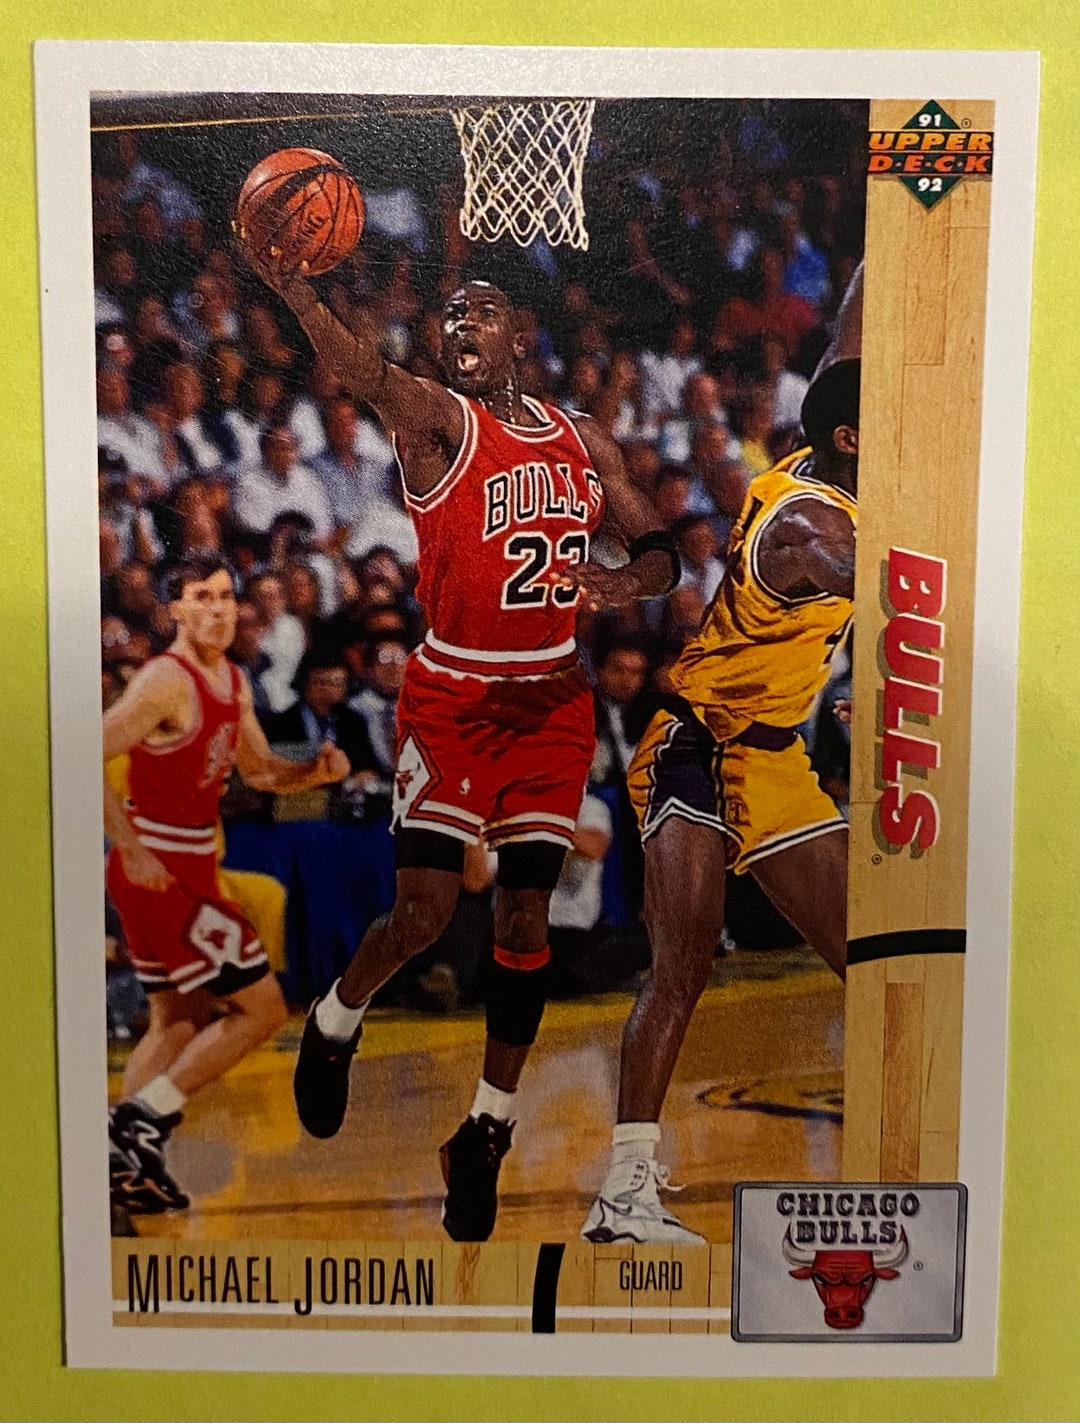 Chicago Bulls 1991 NBA World Champions Team Poster Michael Jordan 23x35in